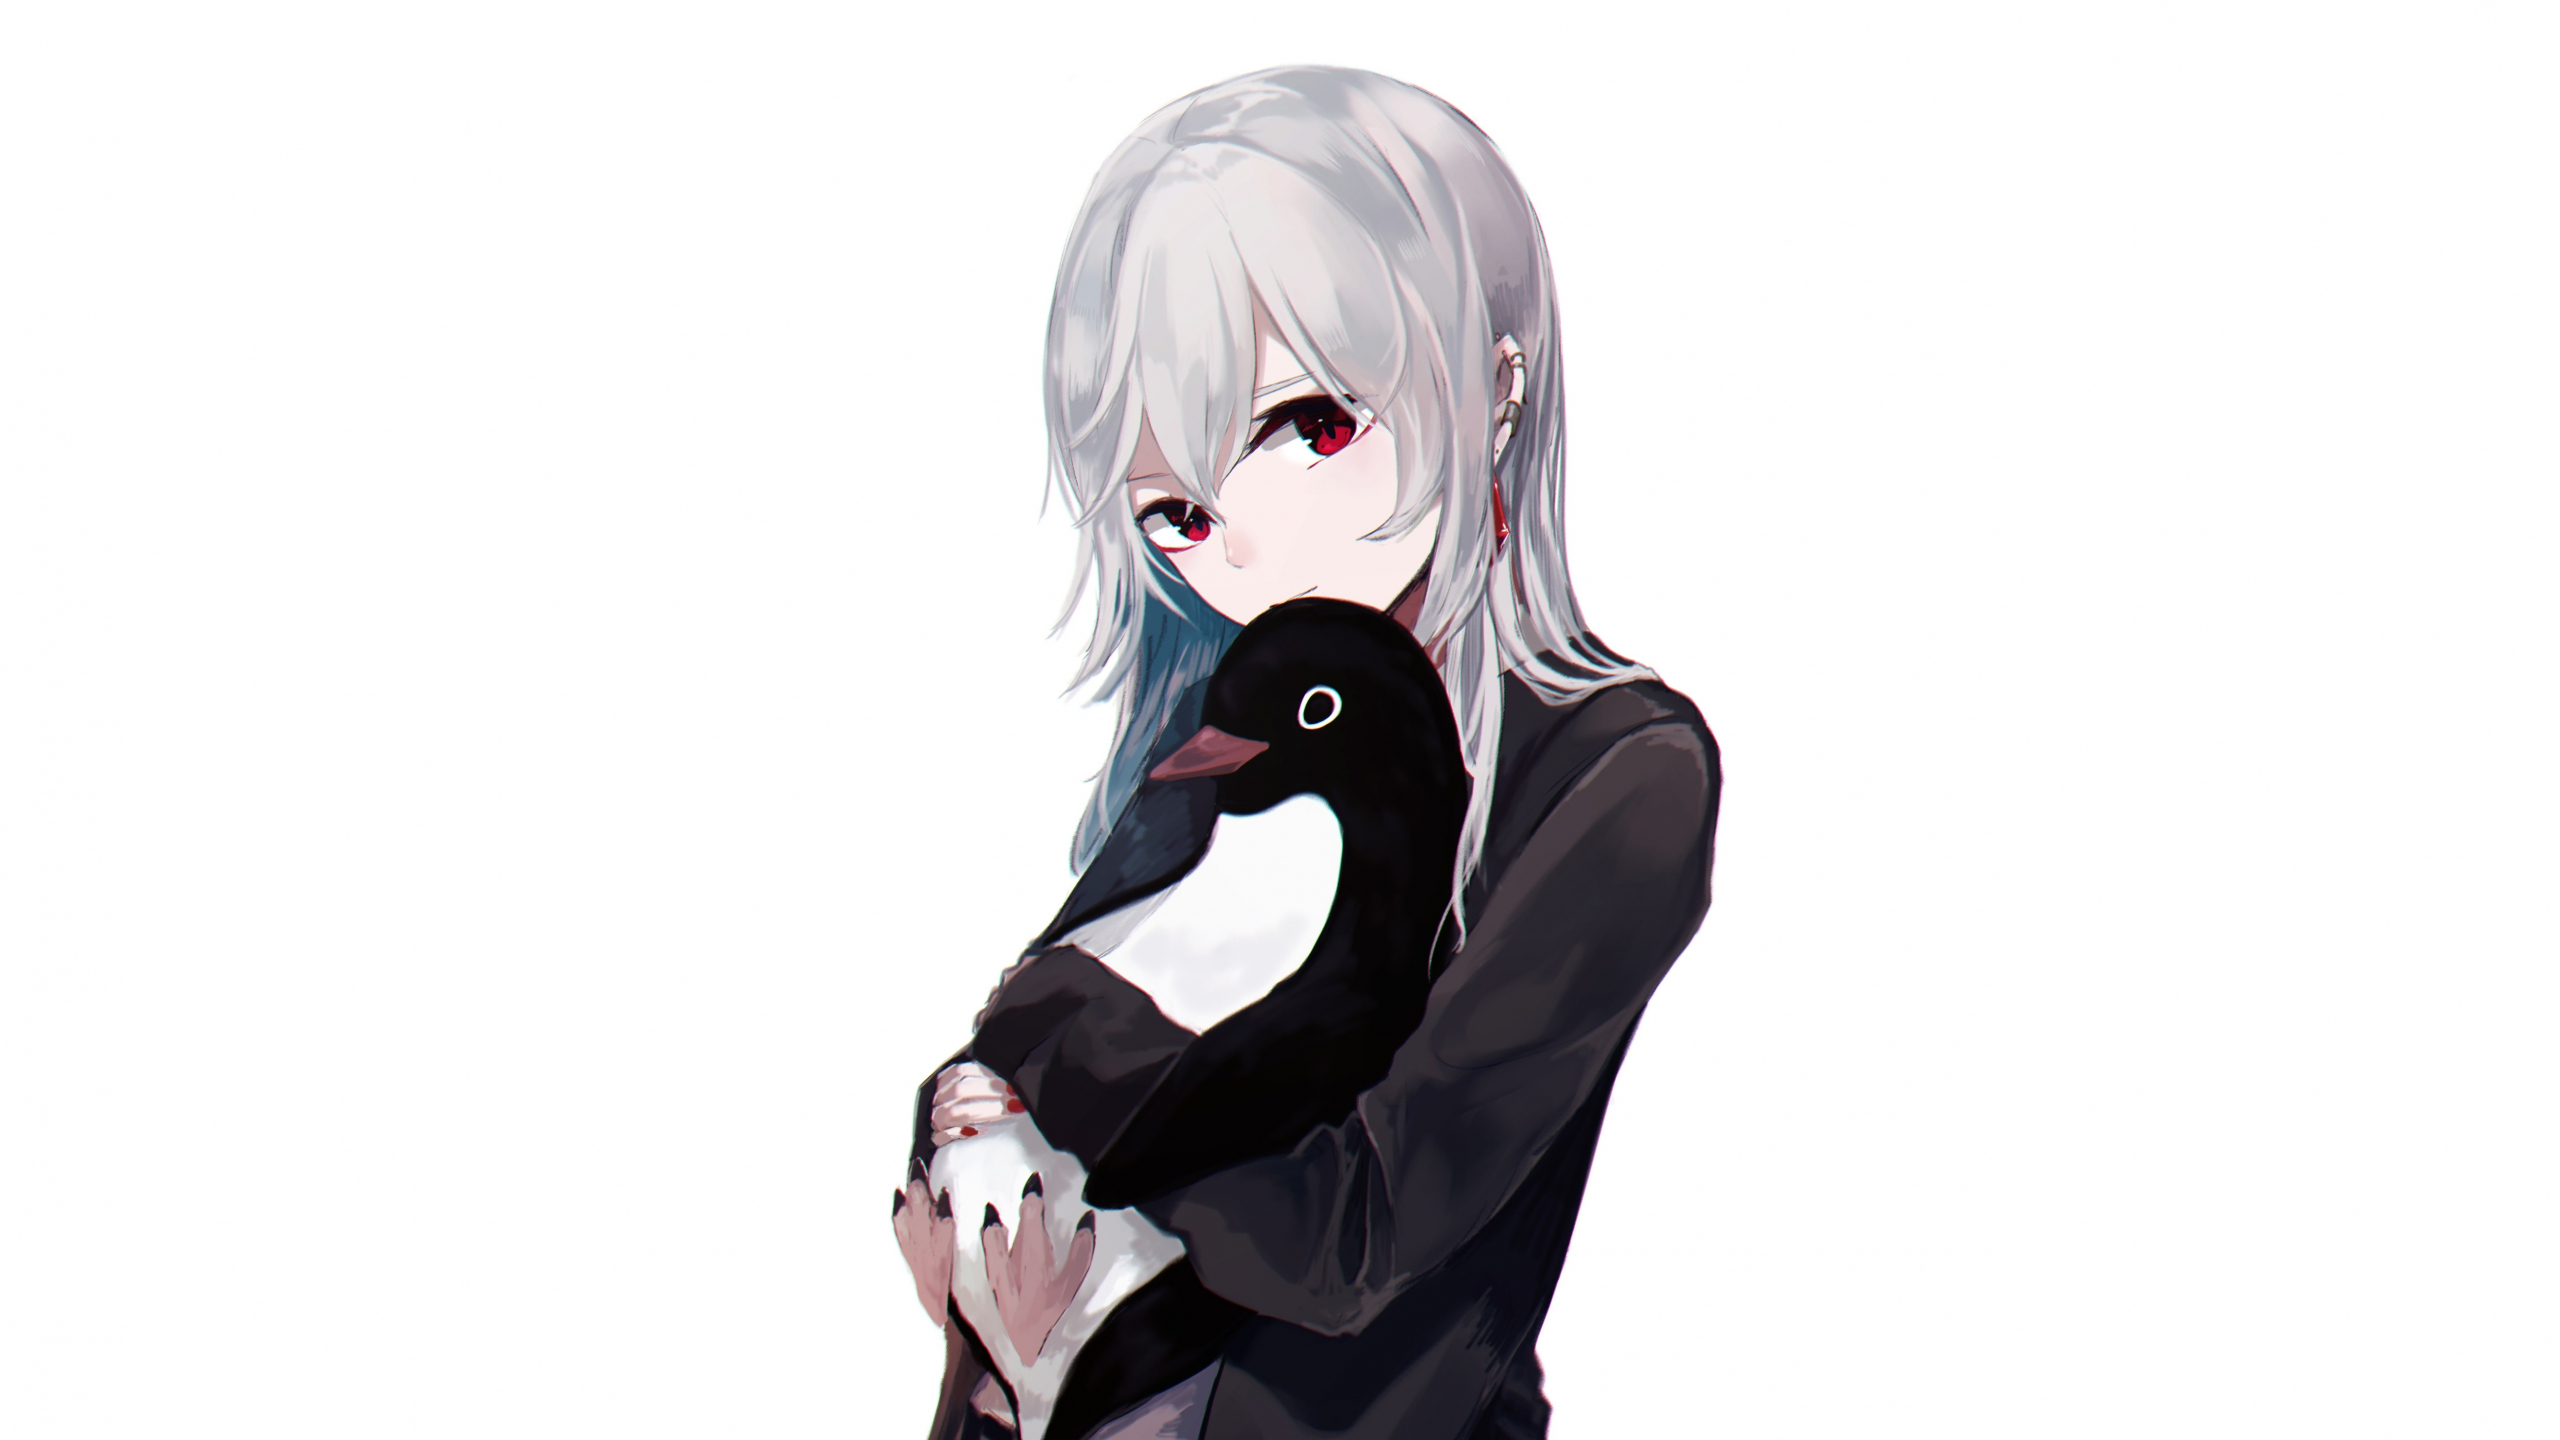 Download wallpaper 2560x1440 anime girl, cute, white hair, original,  penguin, dual wide 16:9 2560x1440 hd background, 5871